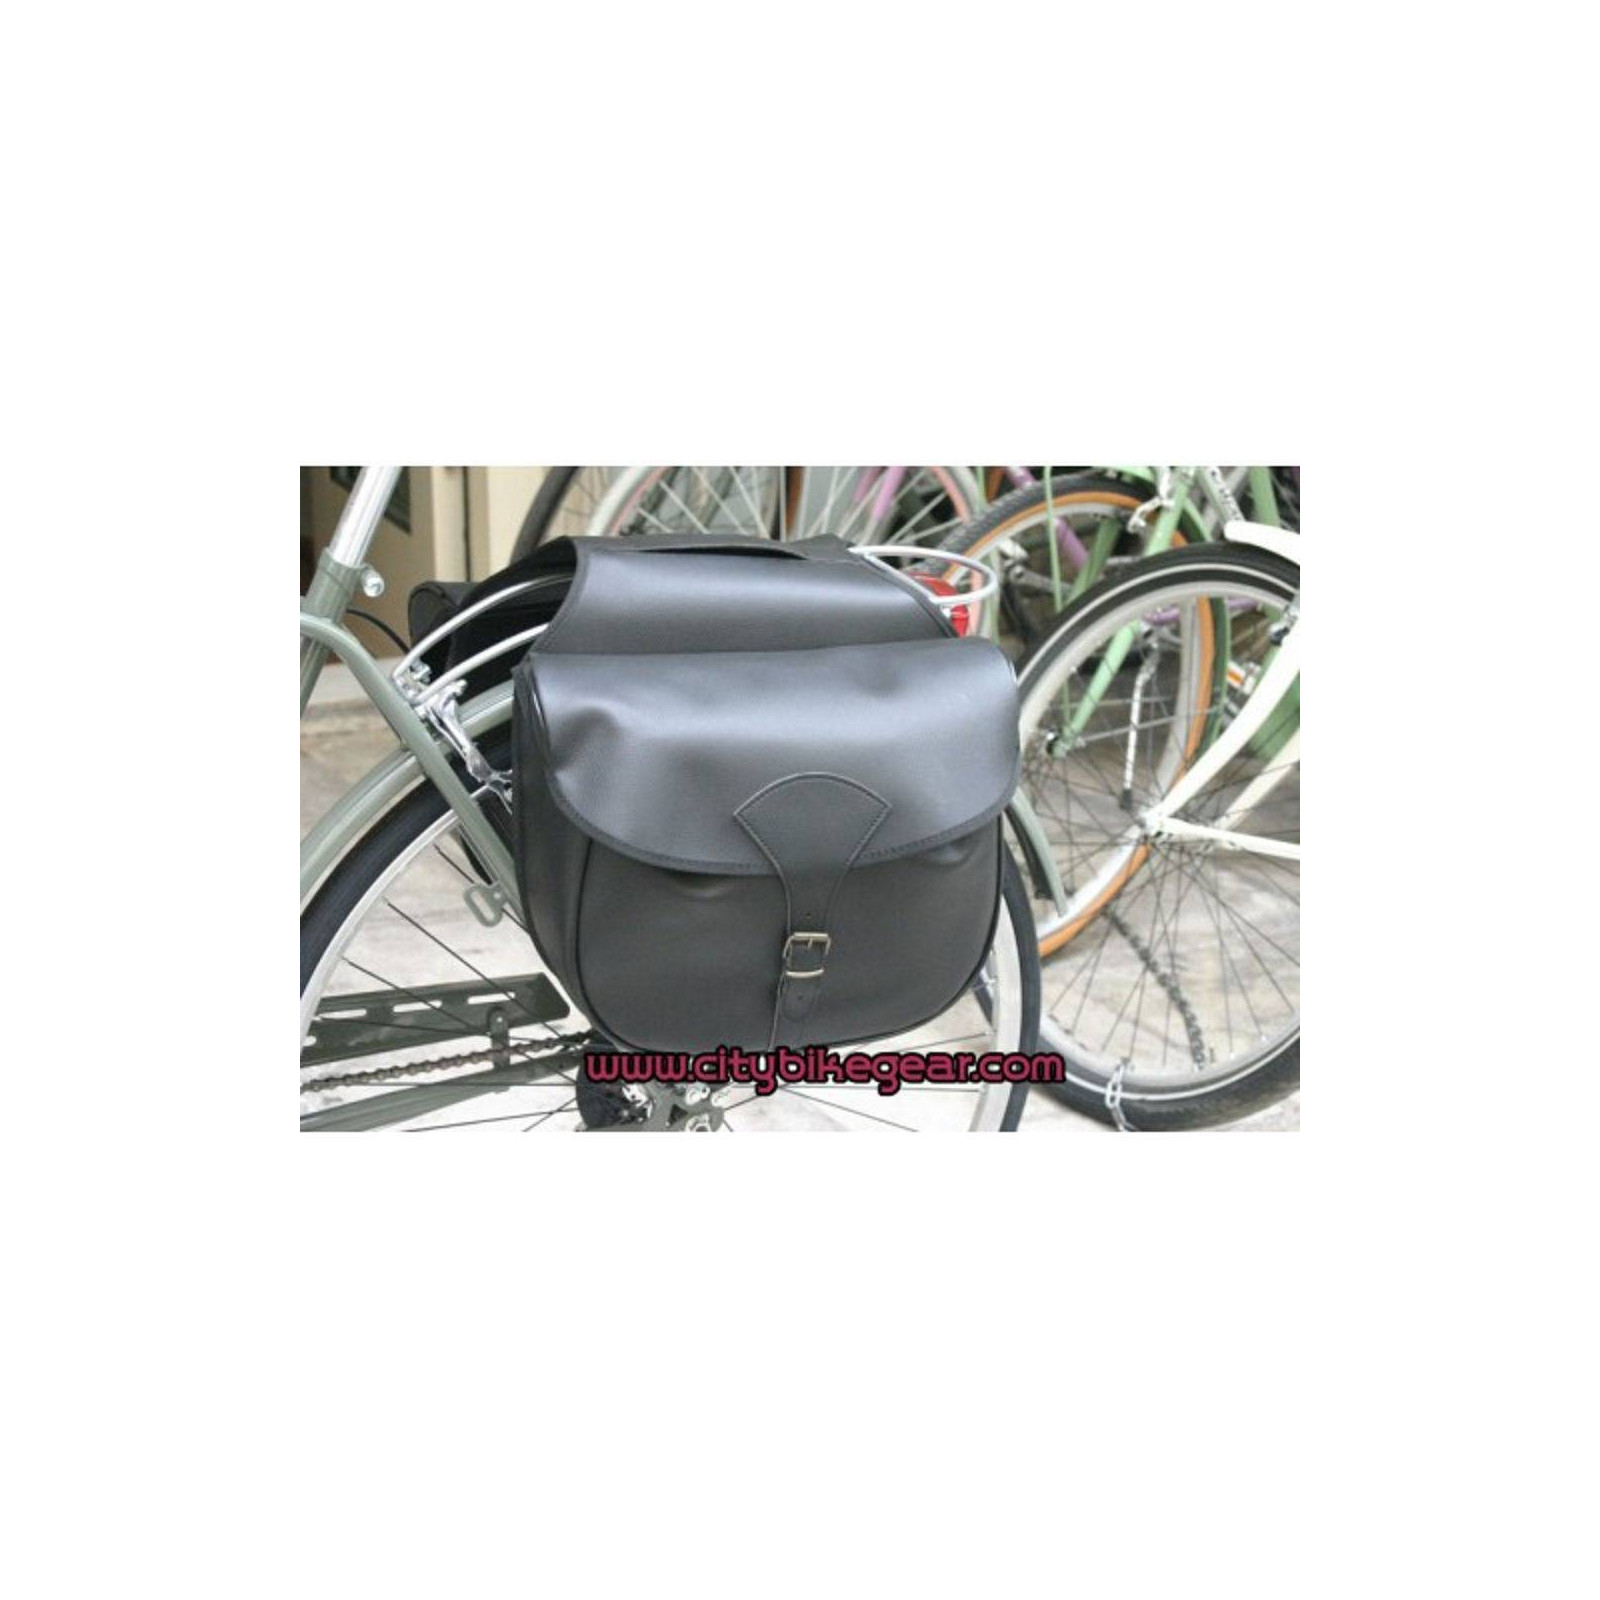 Fahrradkoffer in schwarzem Kunstleder - Klassische Heckdoppeltaschen